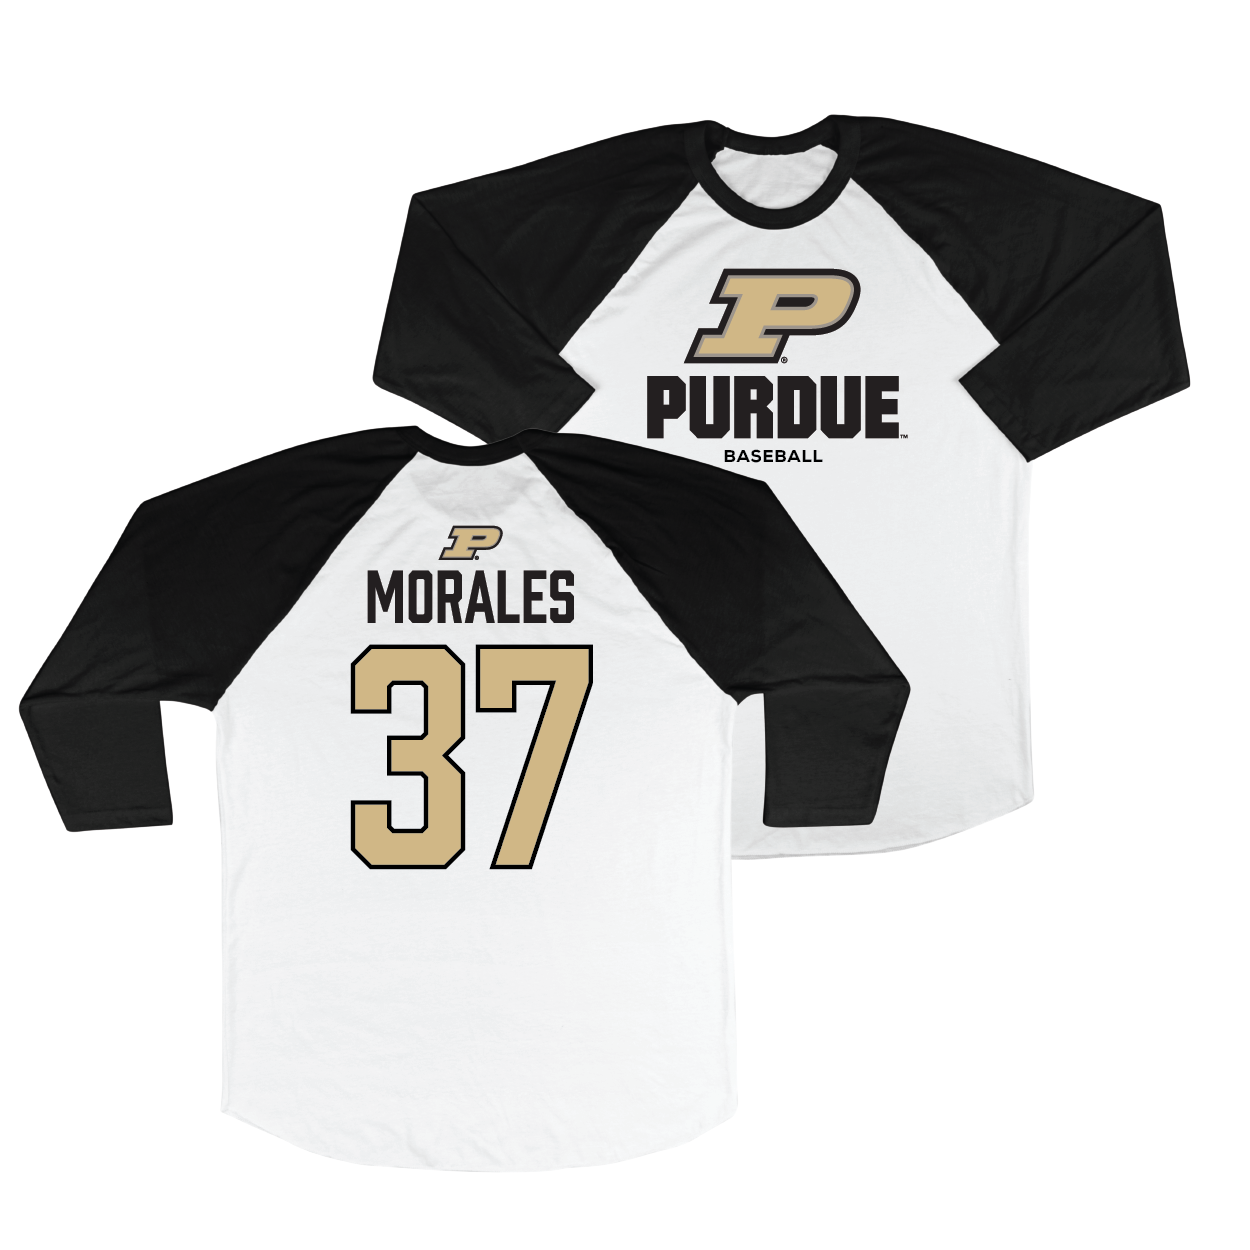 Purdue Baseball 3/4 Sleeve Raglan Top - Jordan Morales | #37